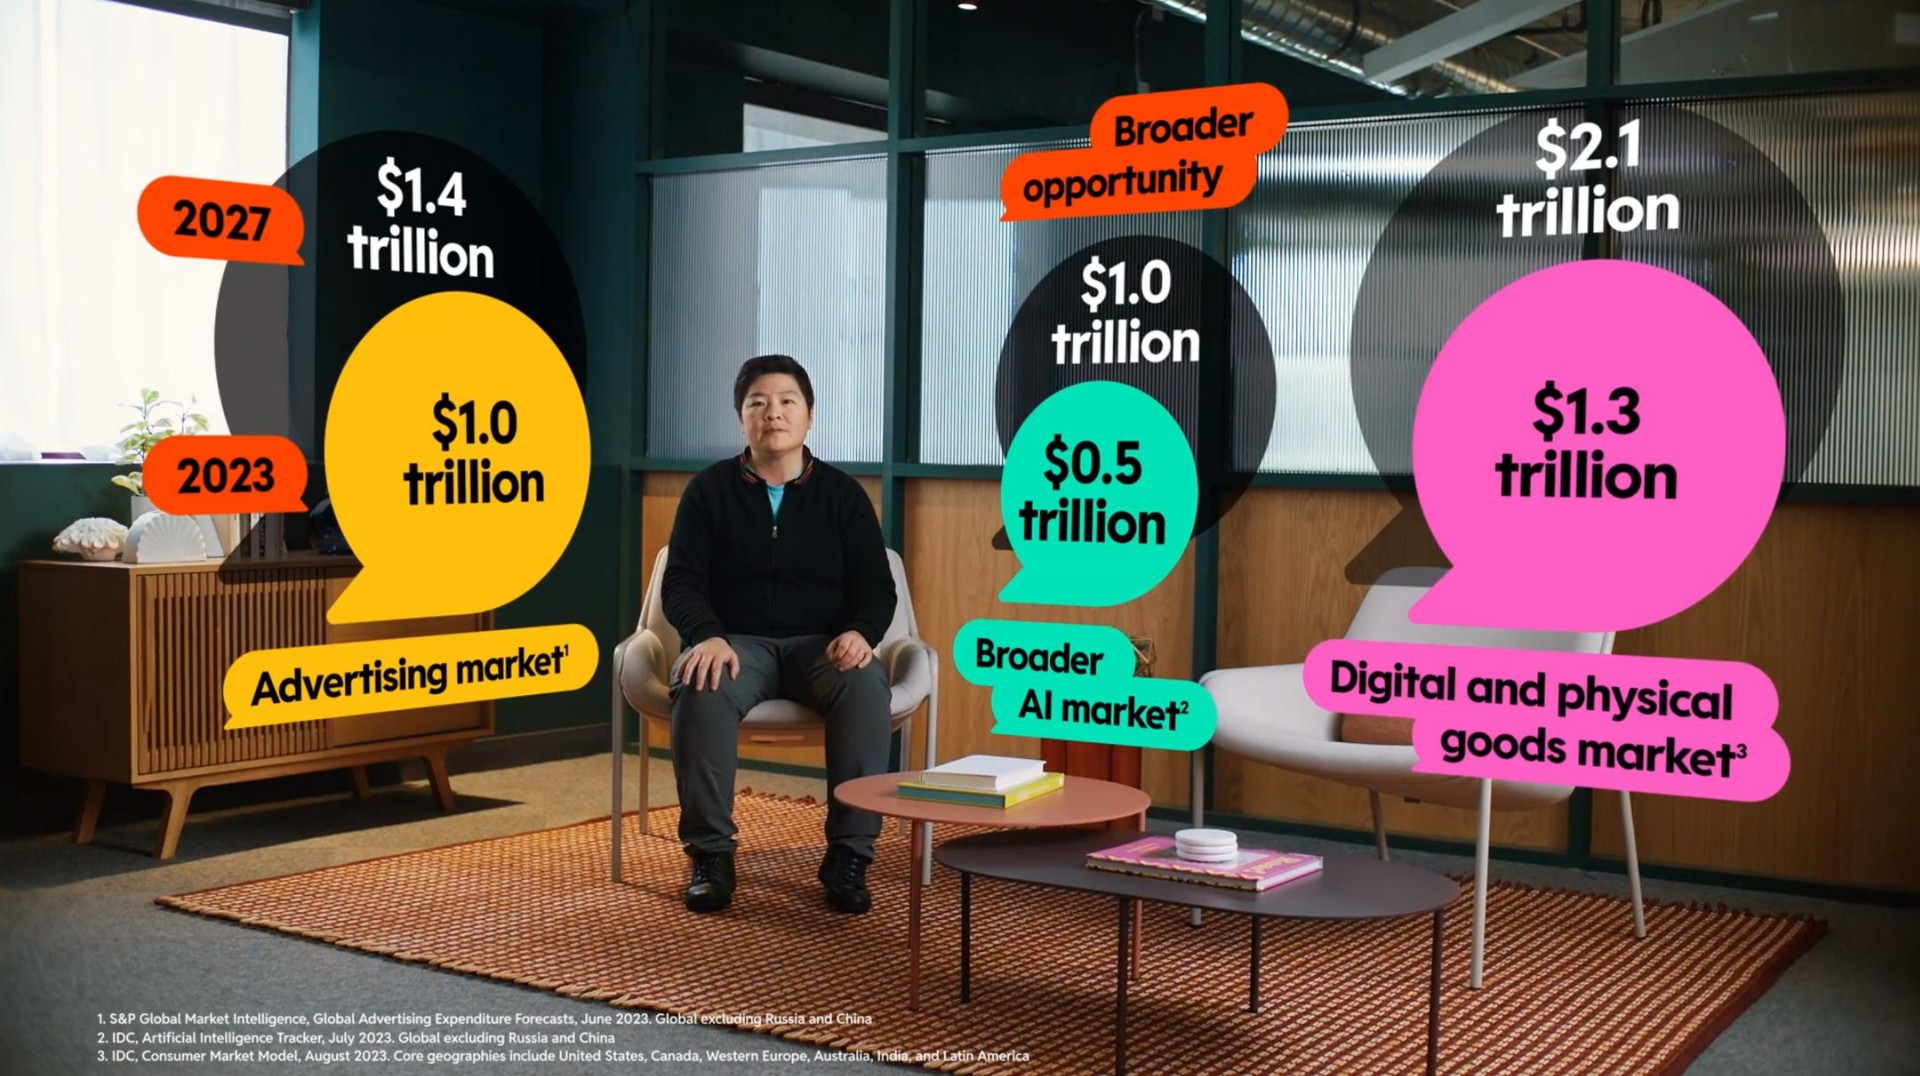 trillion a be i i a trillion market a digital and sic physical goods market | Reddit